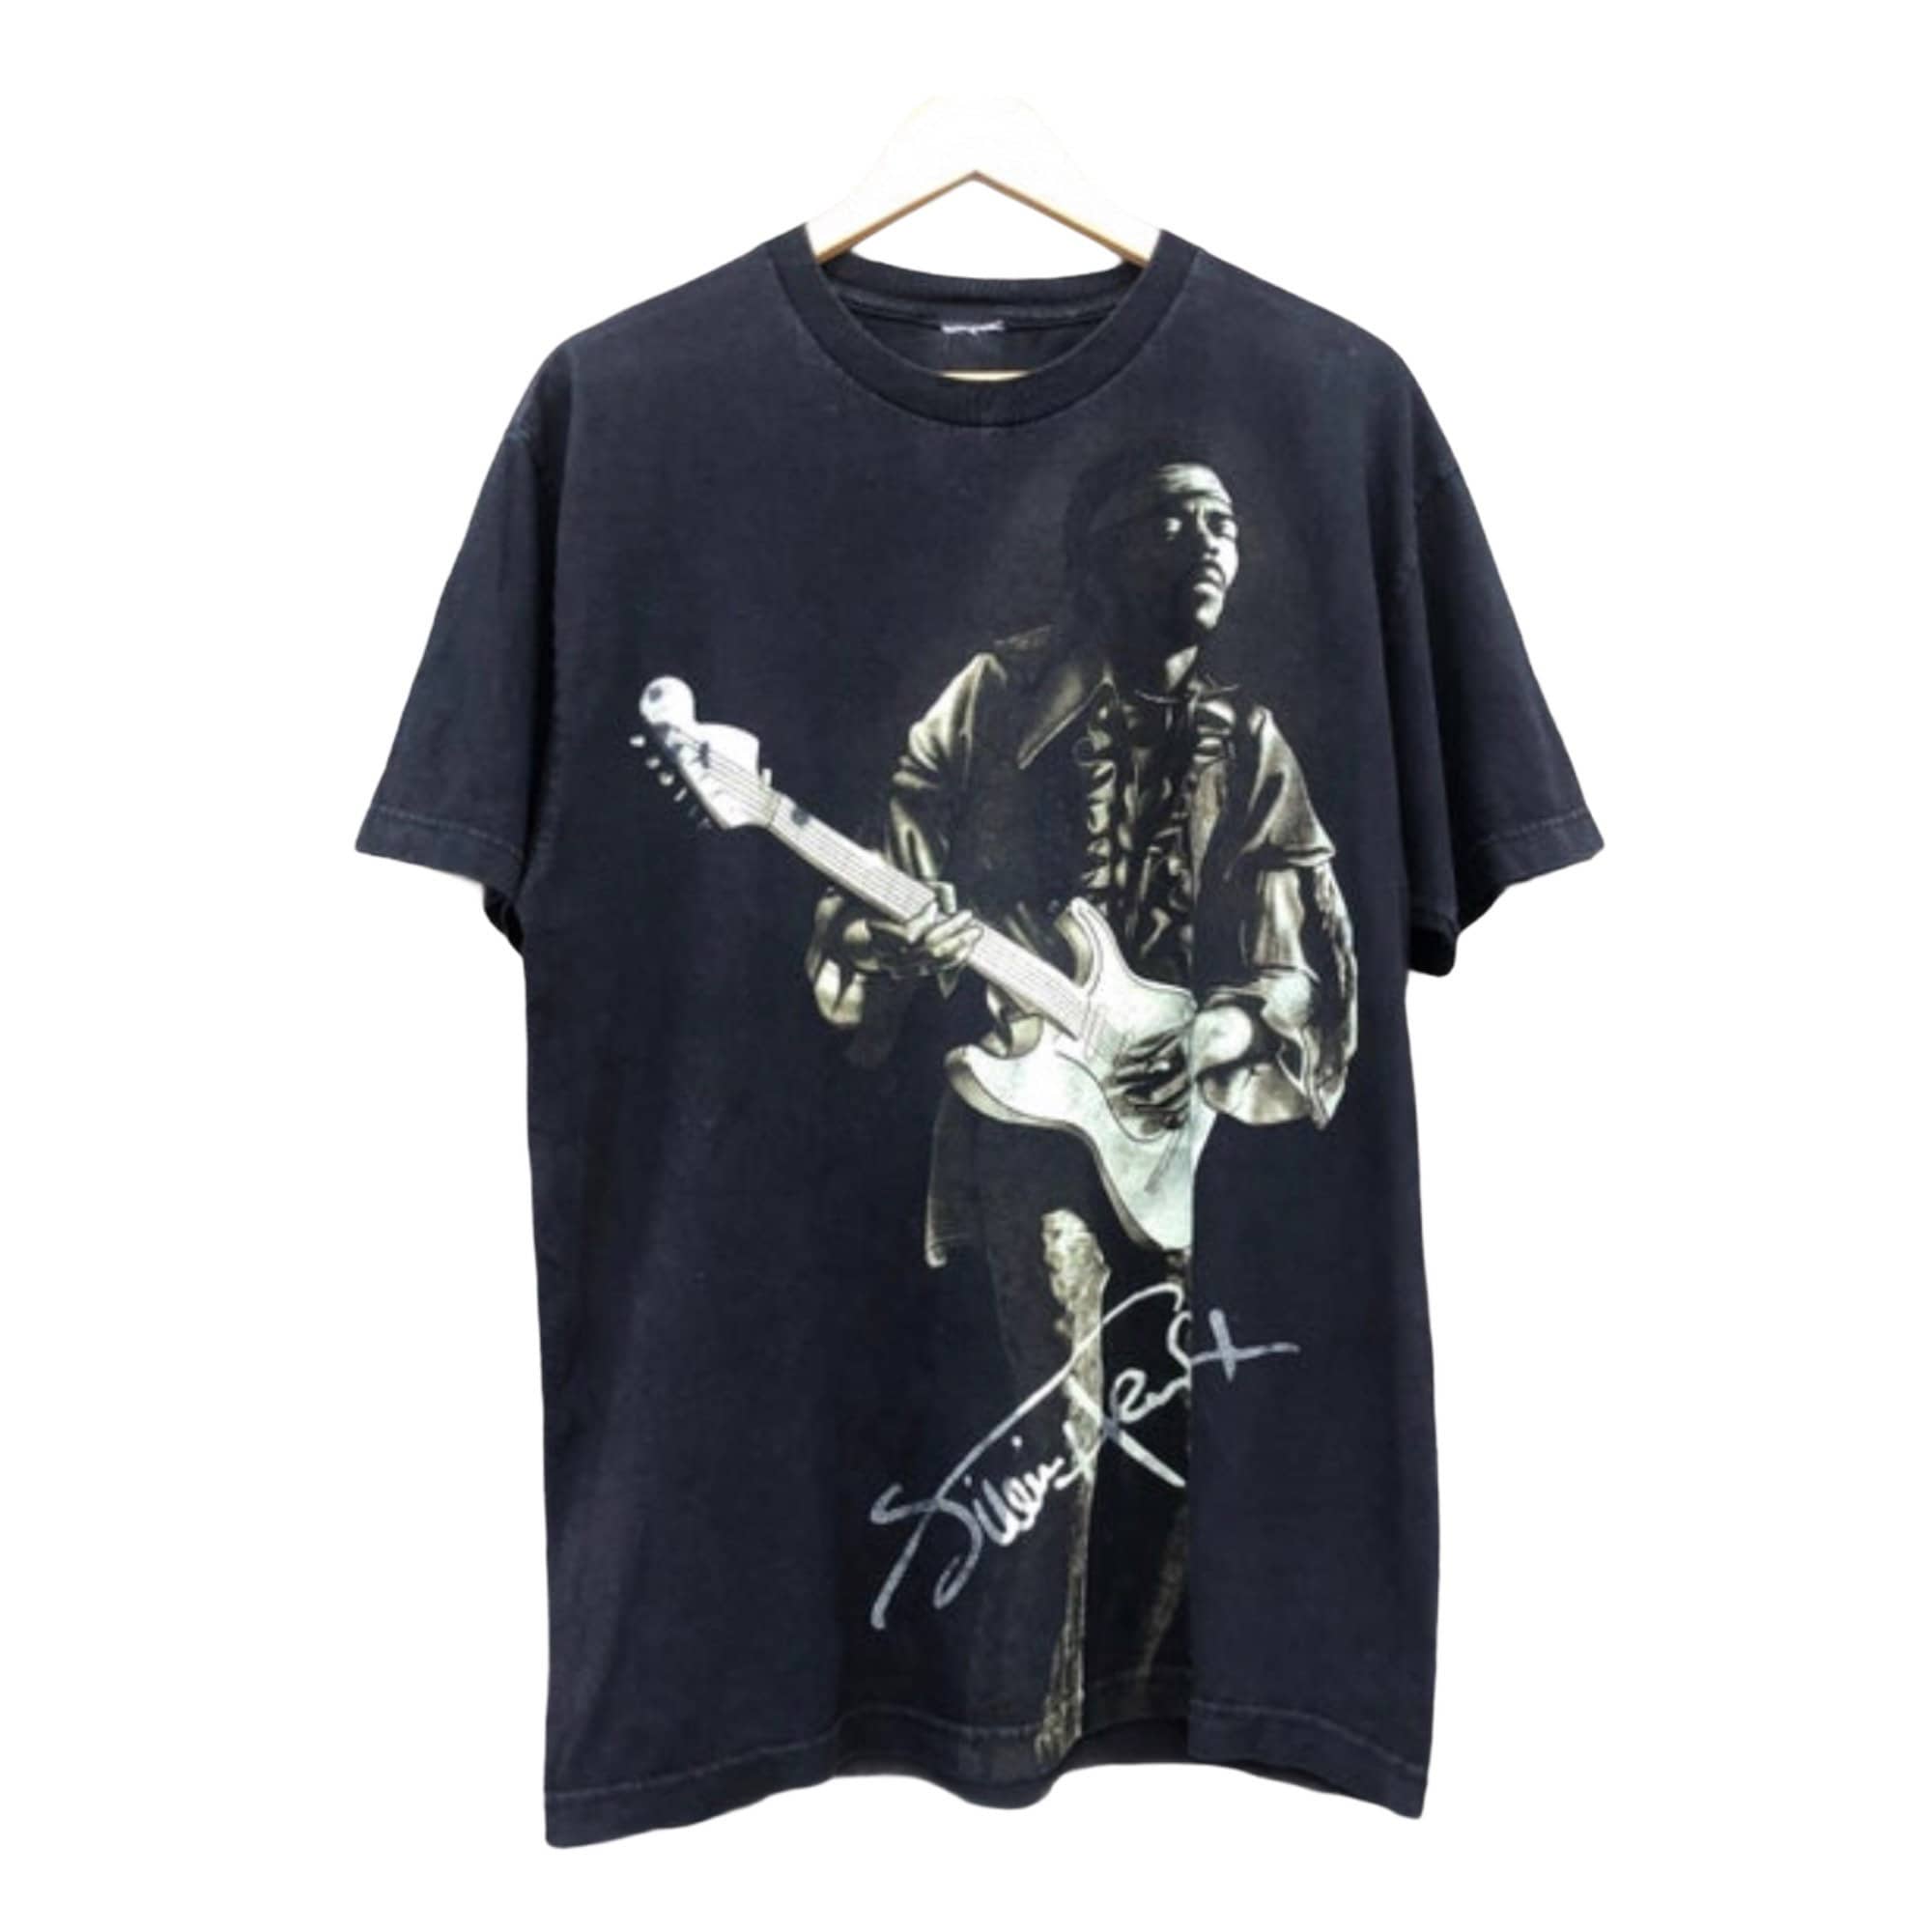 Vintage 90s Jimi Hendrix Play Guitar, Rock Star, alternative rock shirt